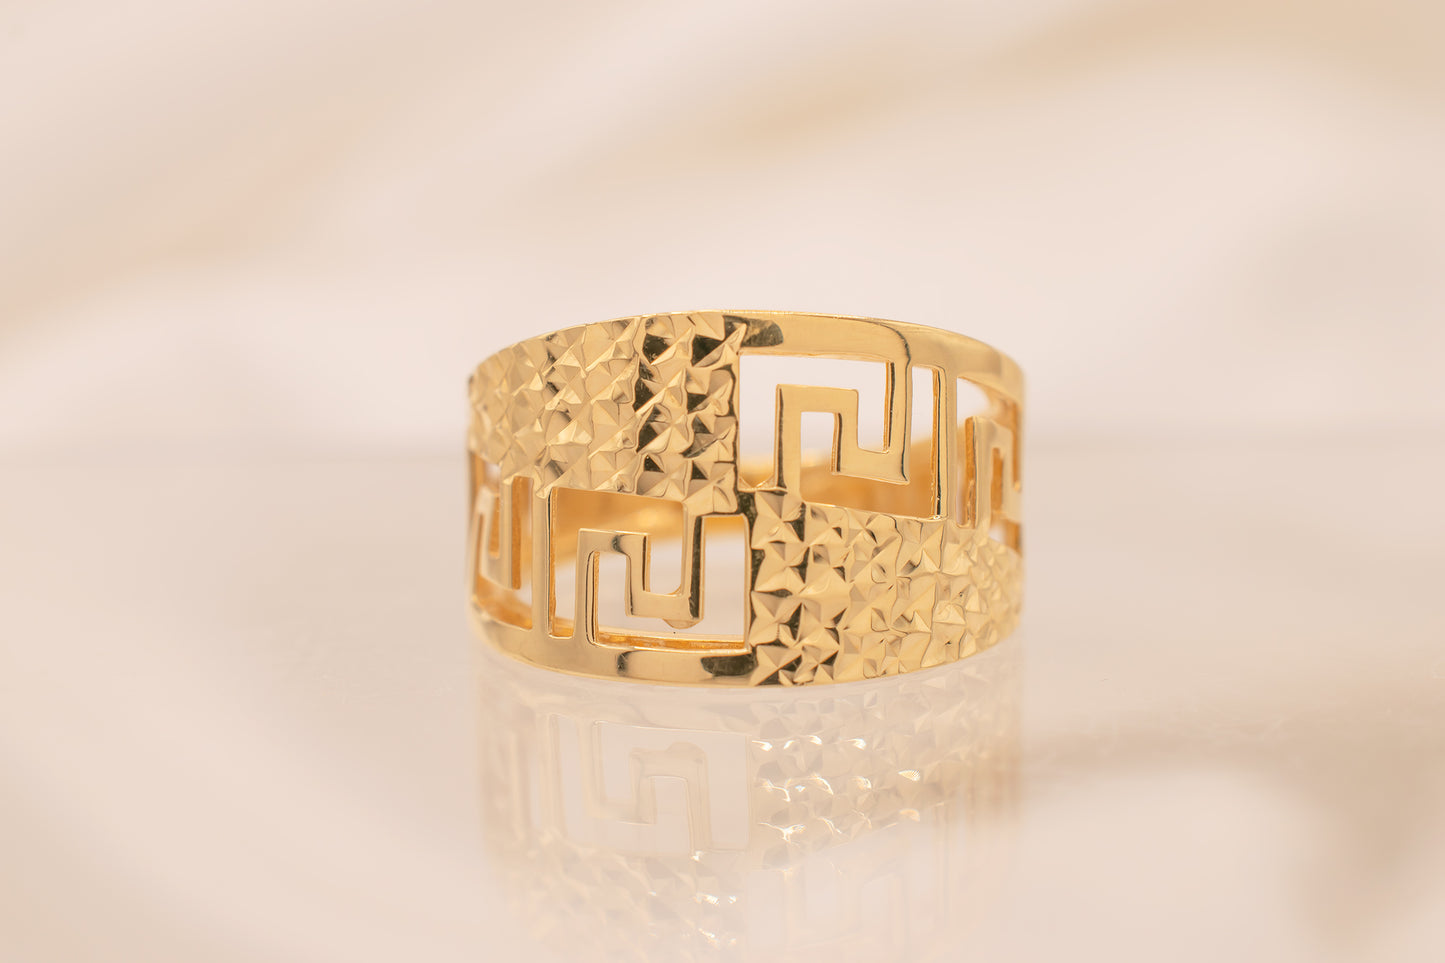 Vintage Estate 18K Yellow Gold Greek Design With Diamond Cut Detail Statement Ring Size 6